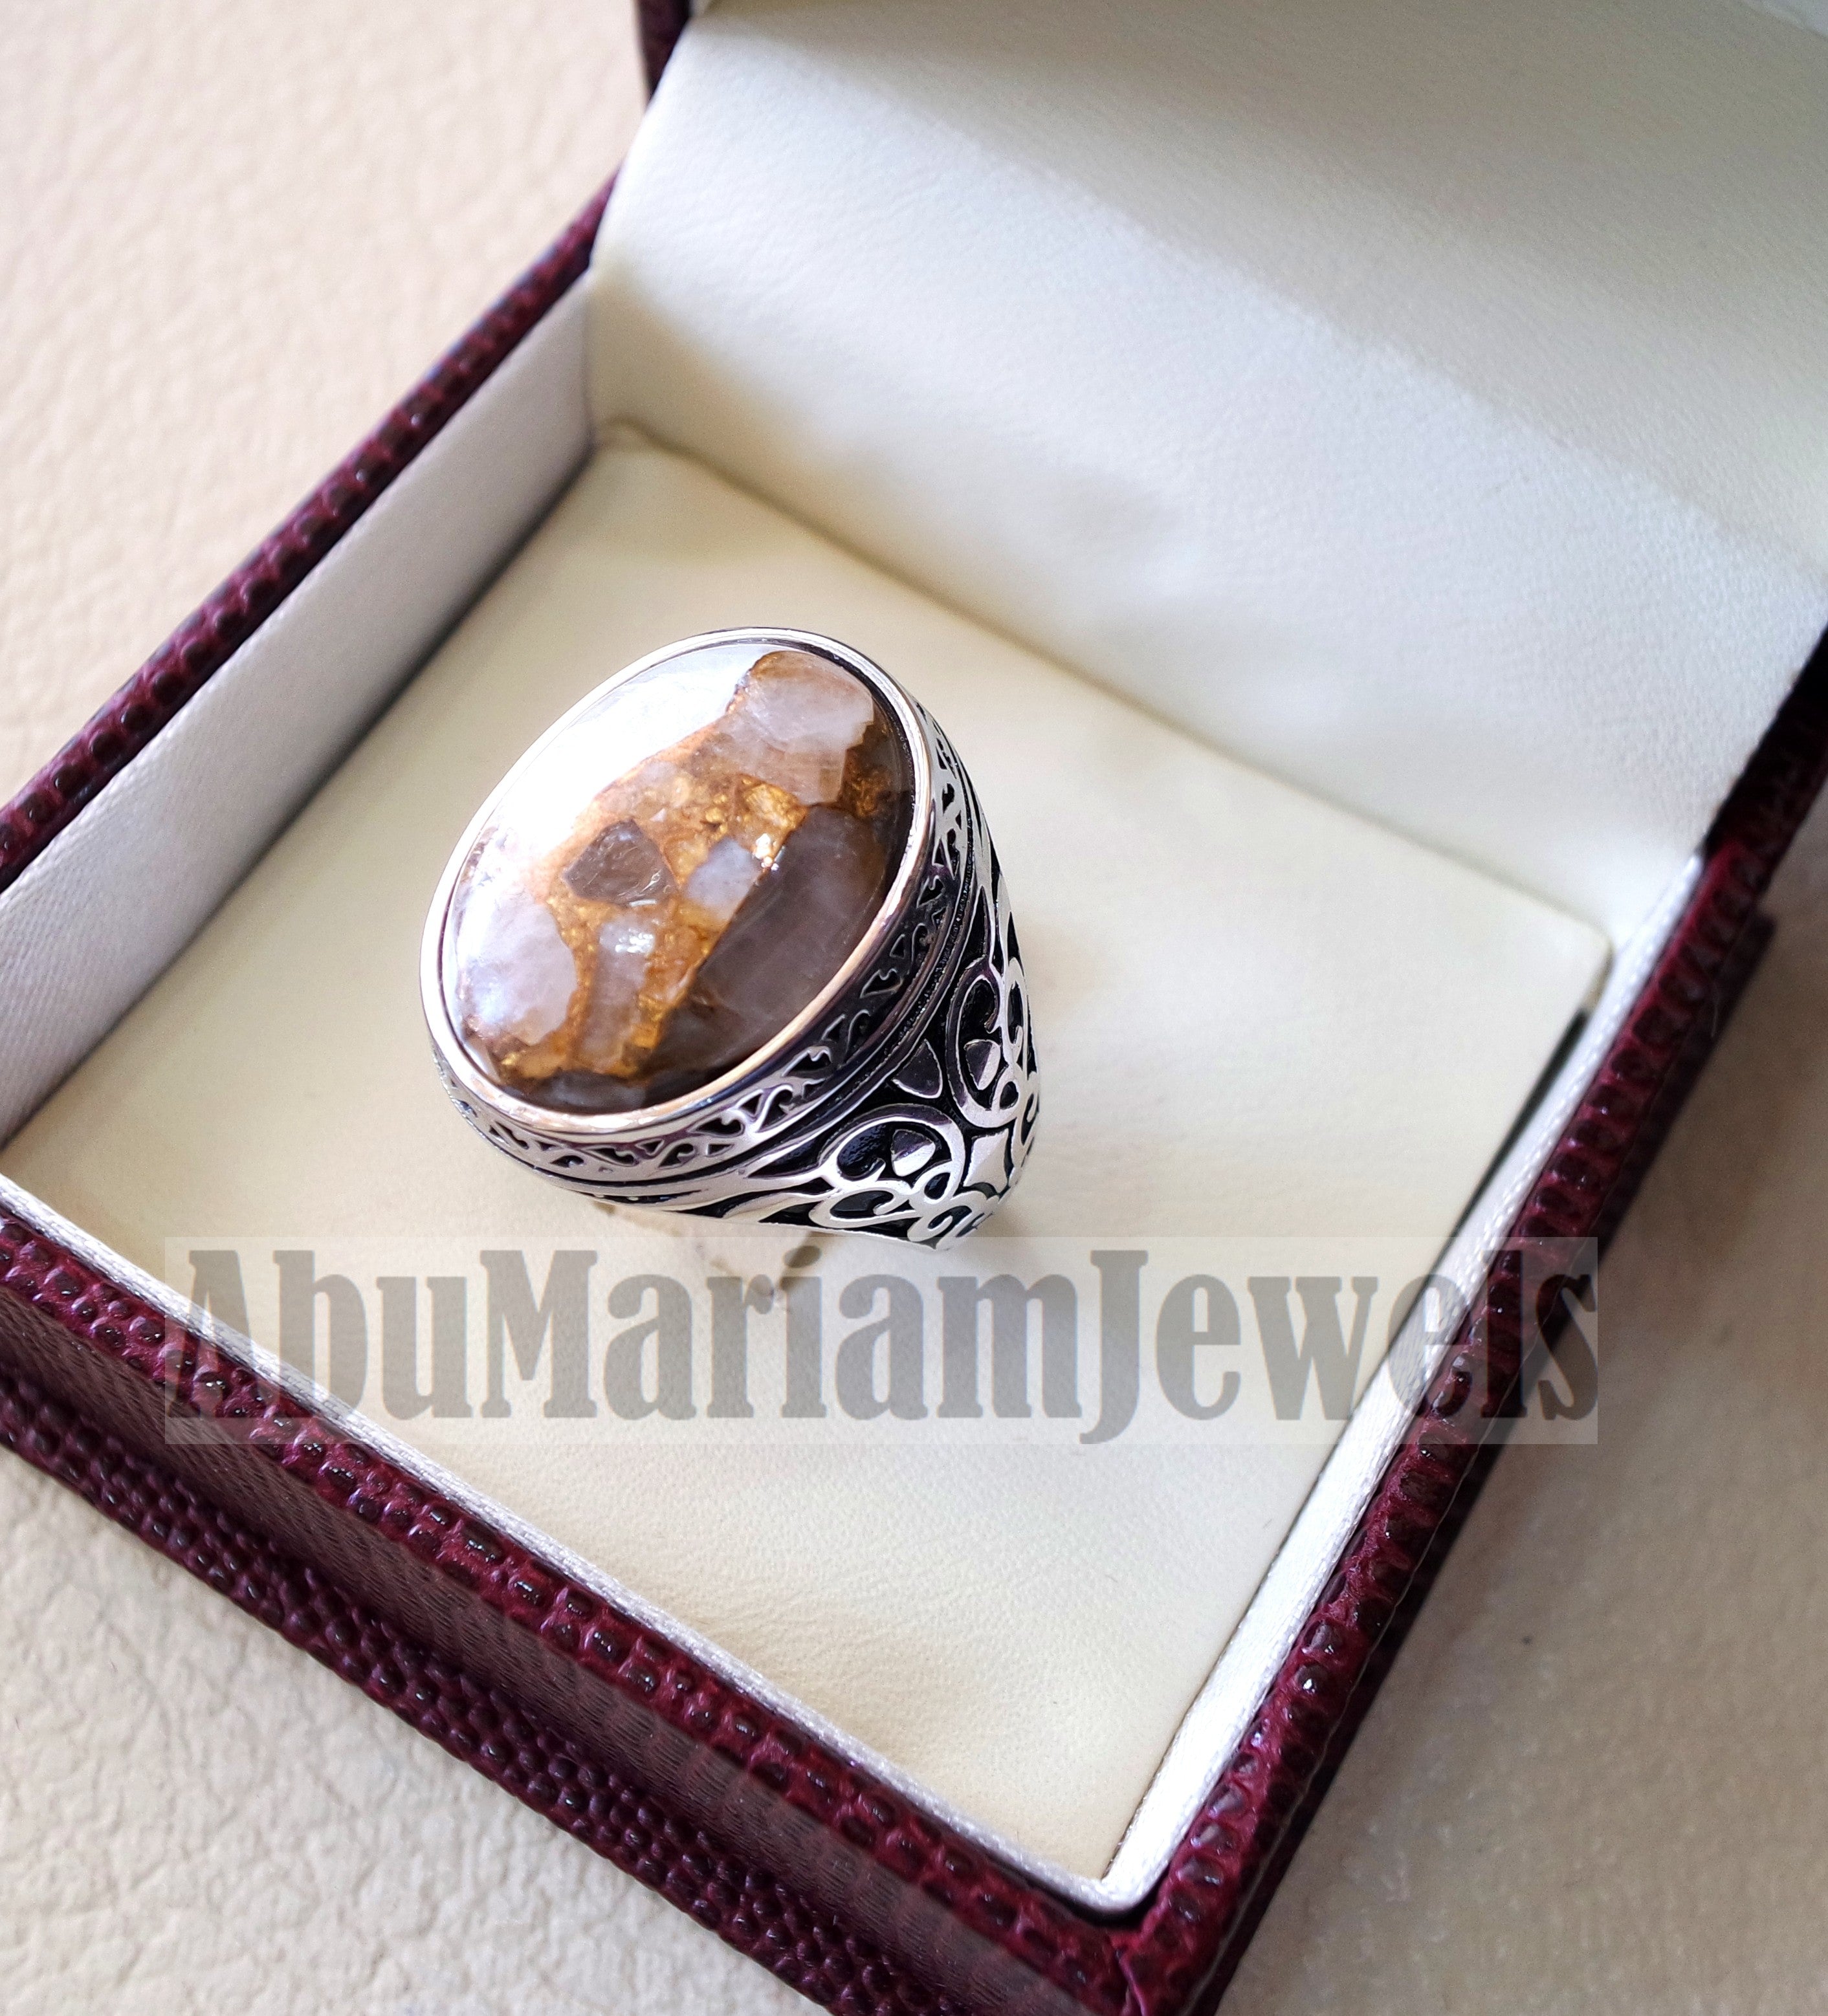 man ring copper Calcite natural stone sterling silver 925 oval cabochon semi precious gem ottoman arabic style all sizes jewelry